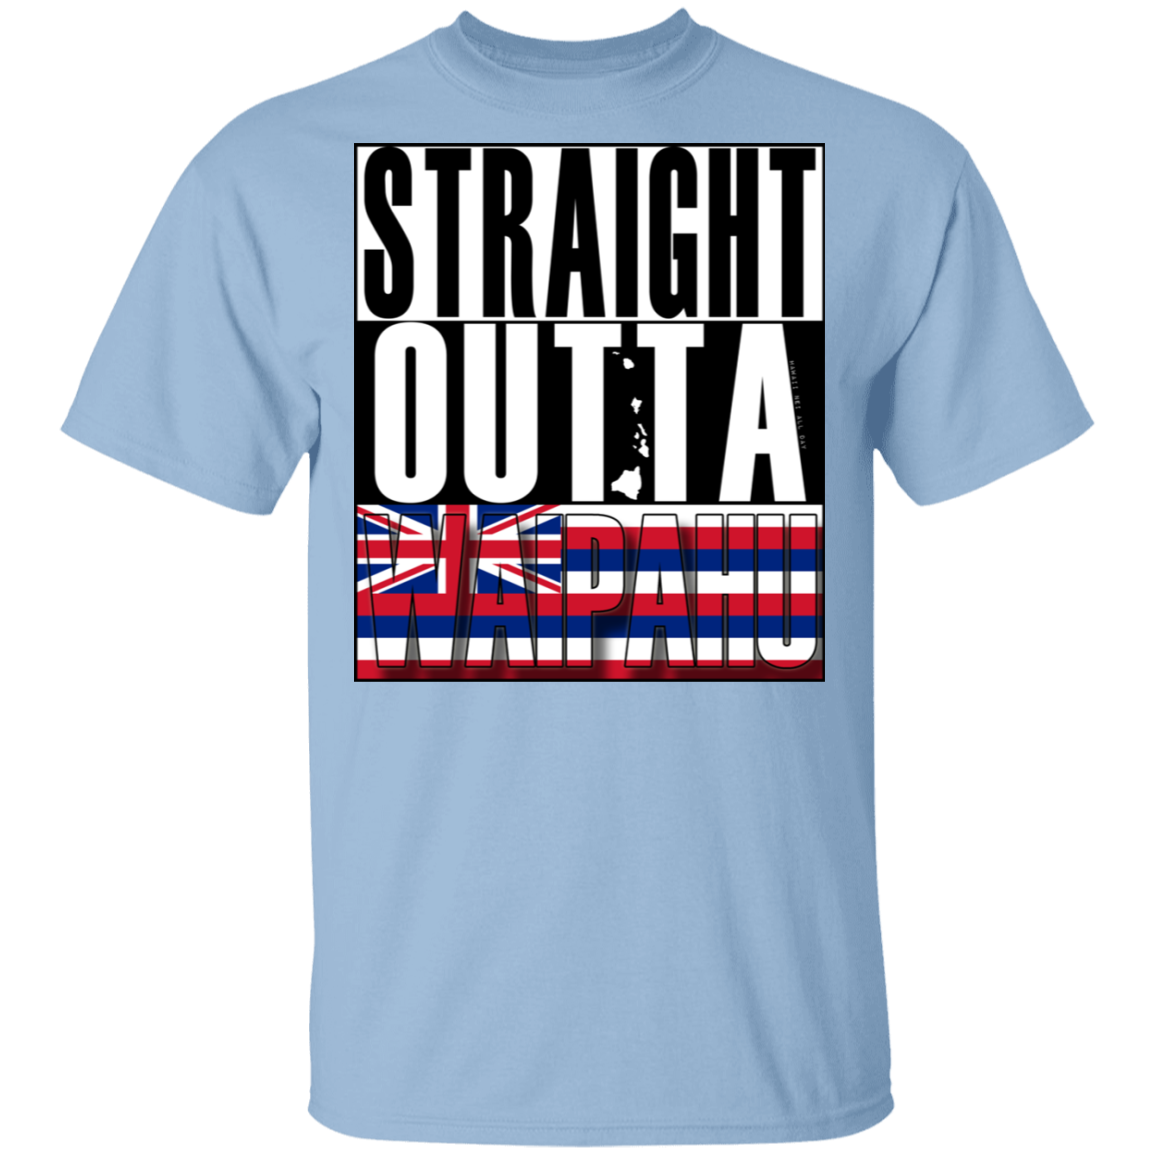 Straight Outta Waipahu T-Shirt, T-Shirts, Hawaii Nei All Day